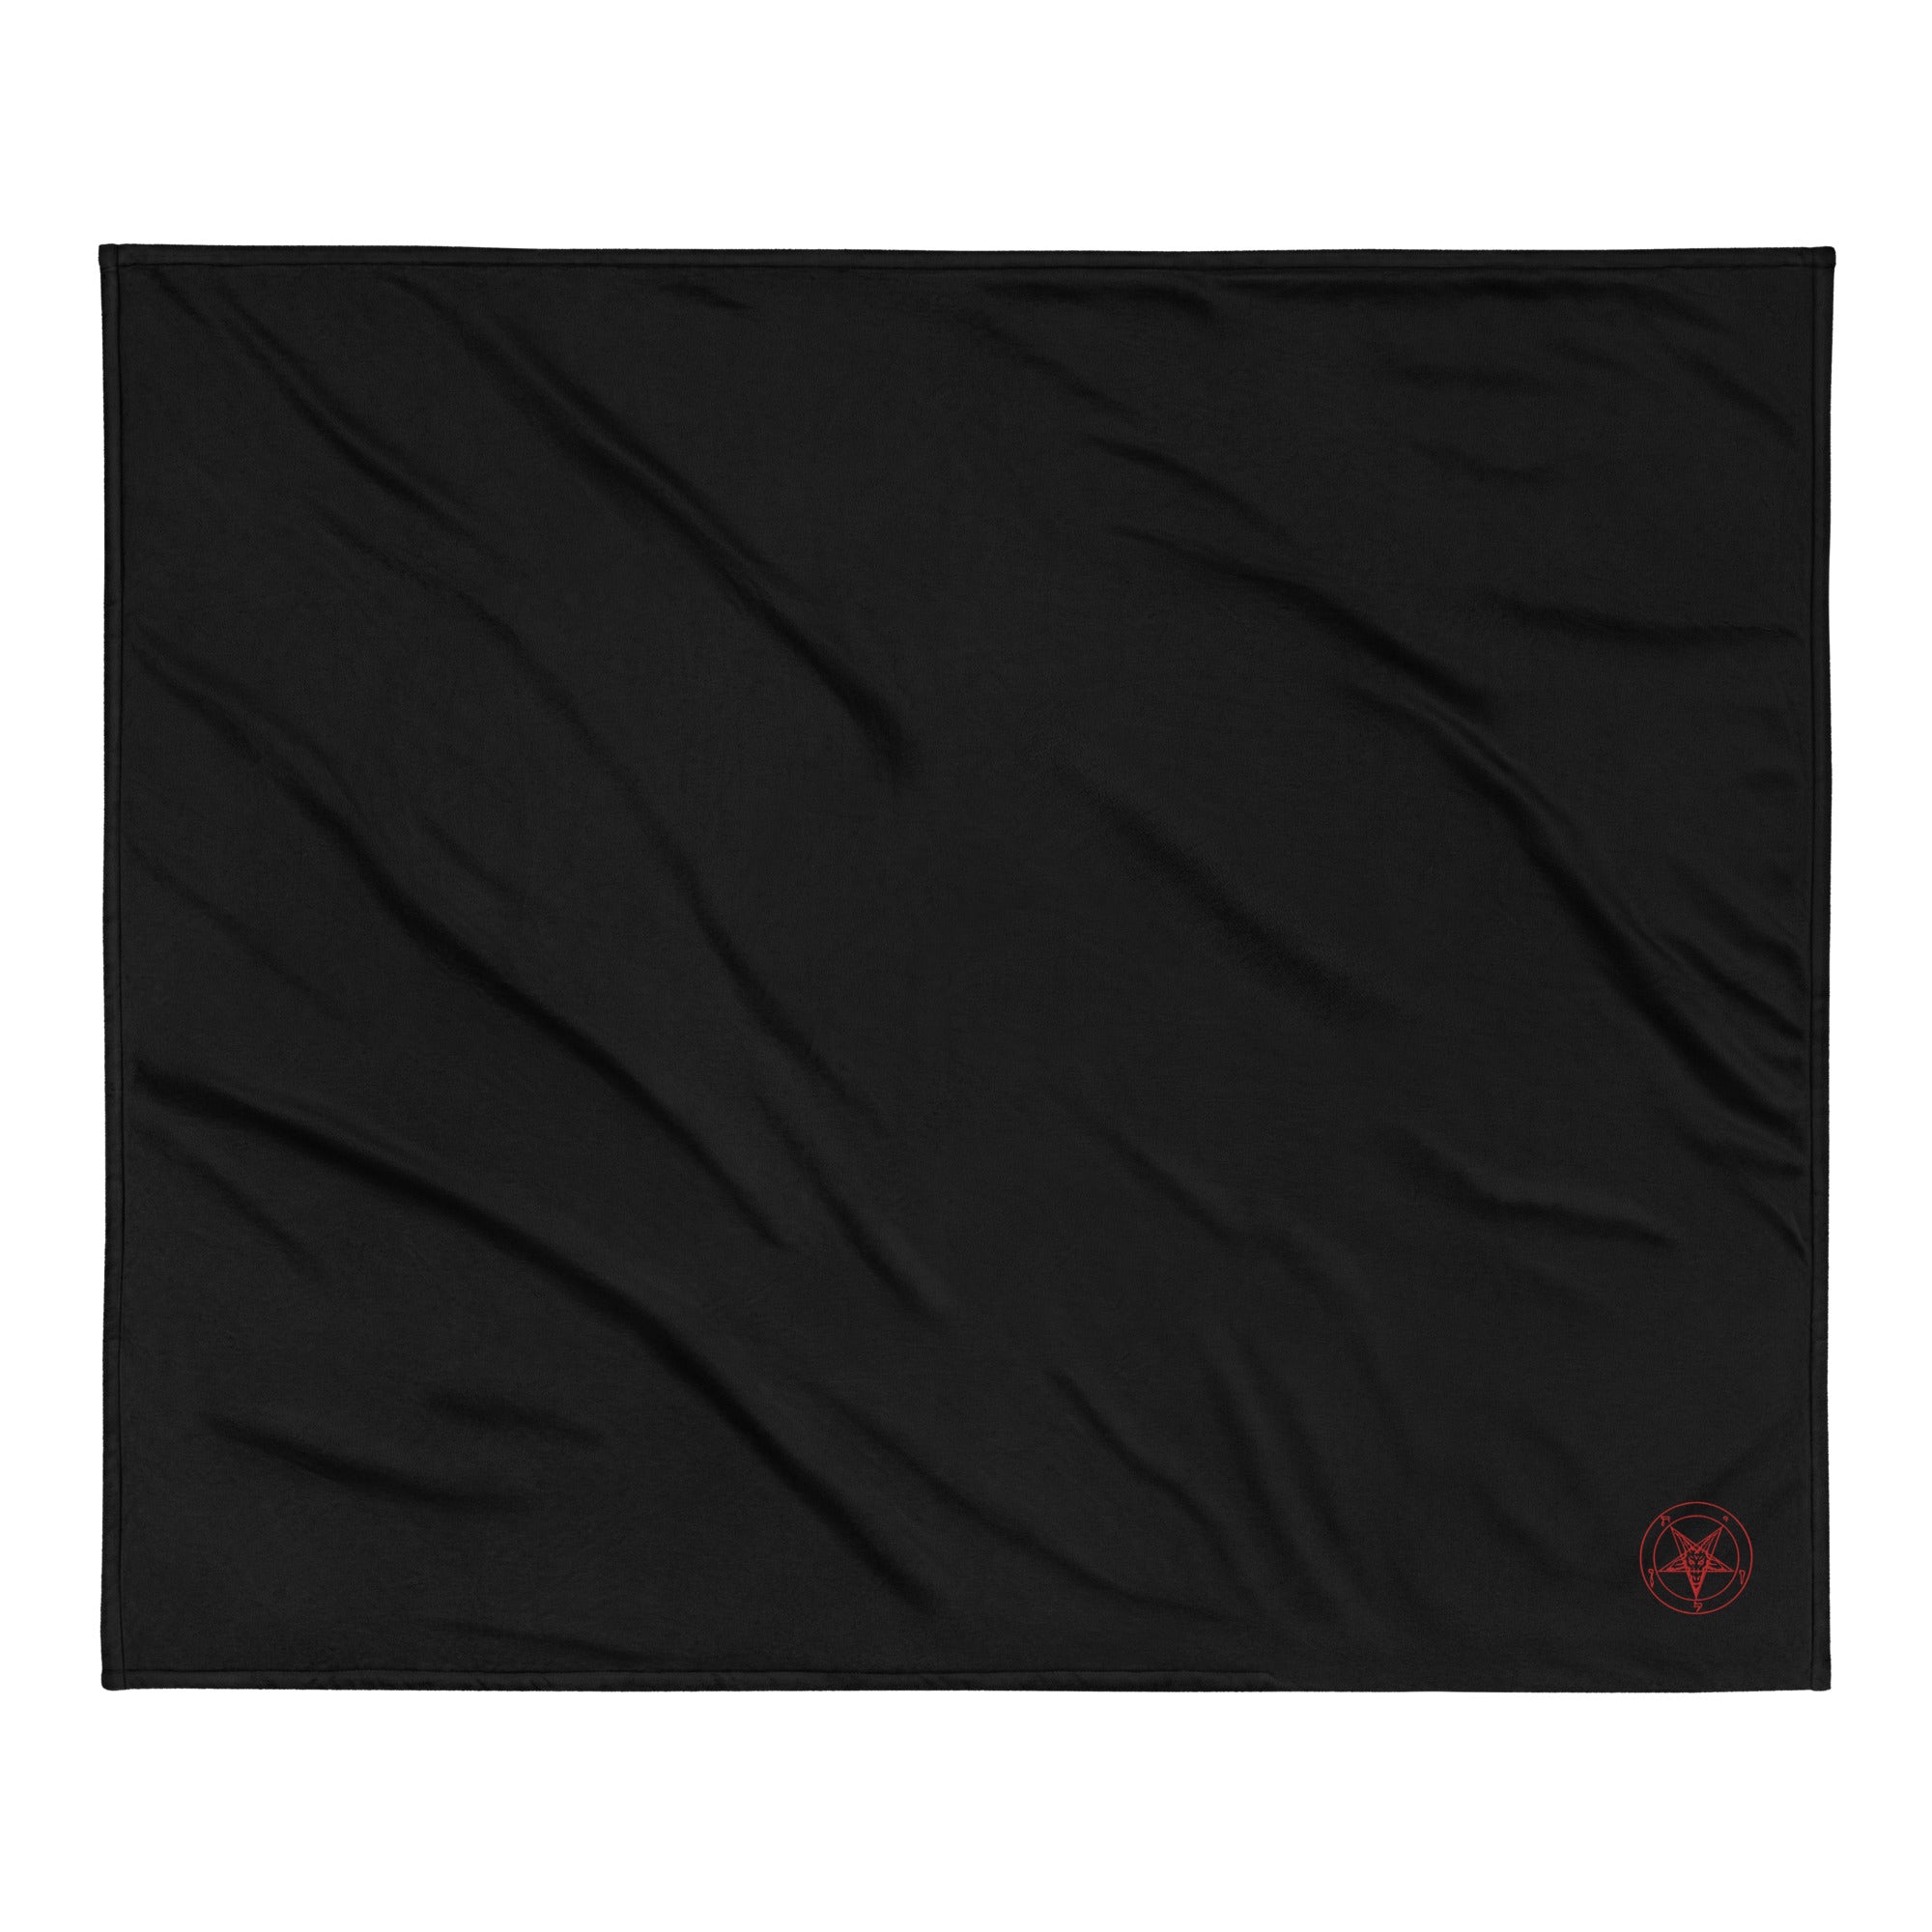 Sigil of Baphomet Satanic Occult Symbol Embroidered Premium Sherpa Blanket Red Thread - Edge of Life Designs